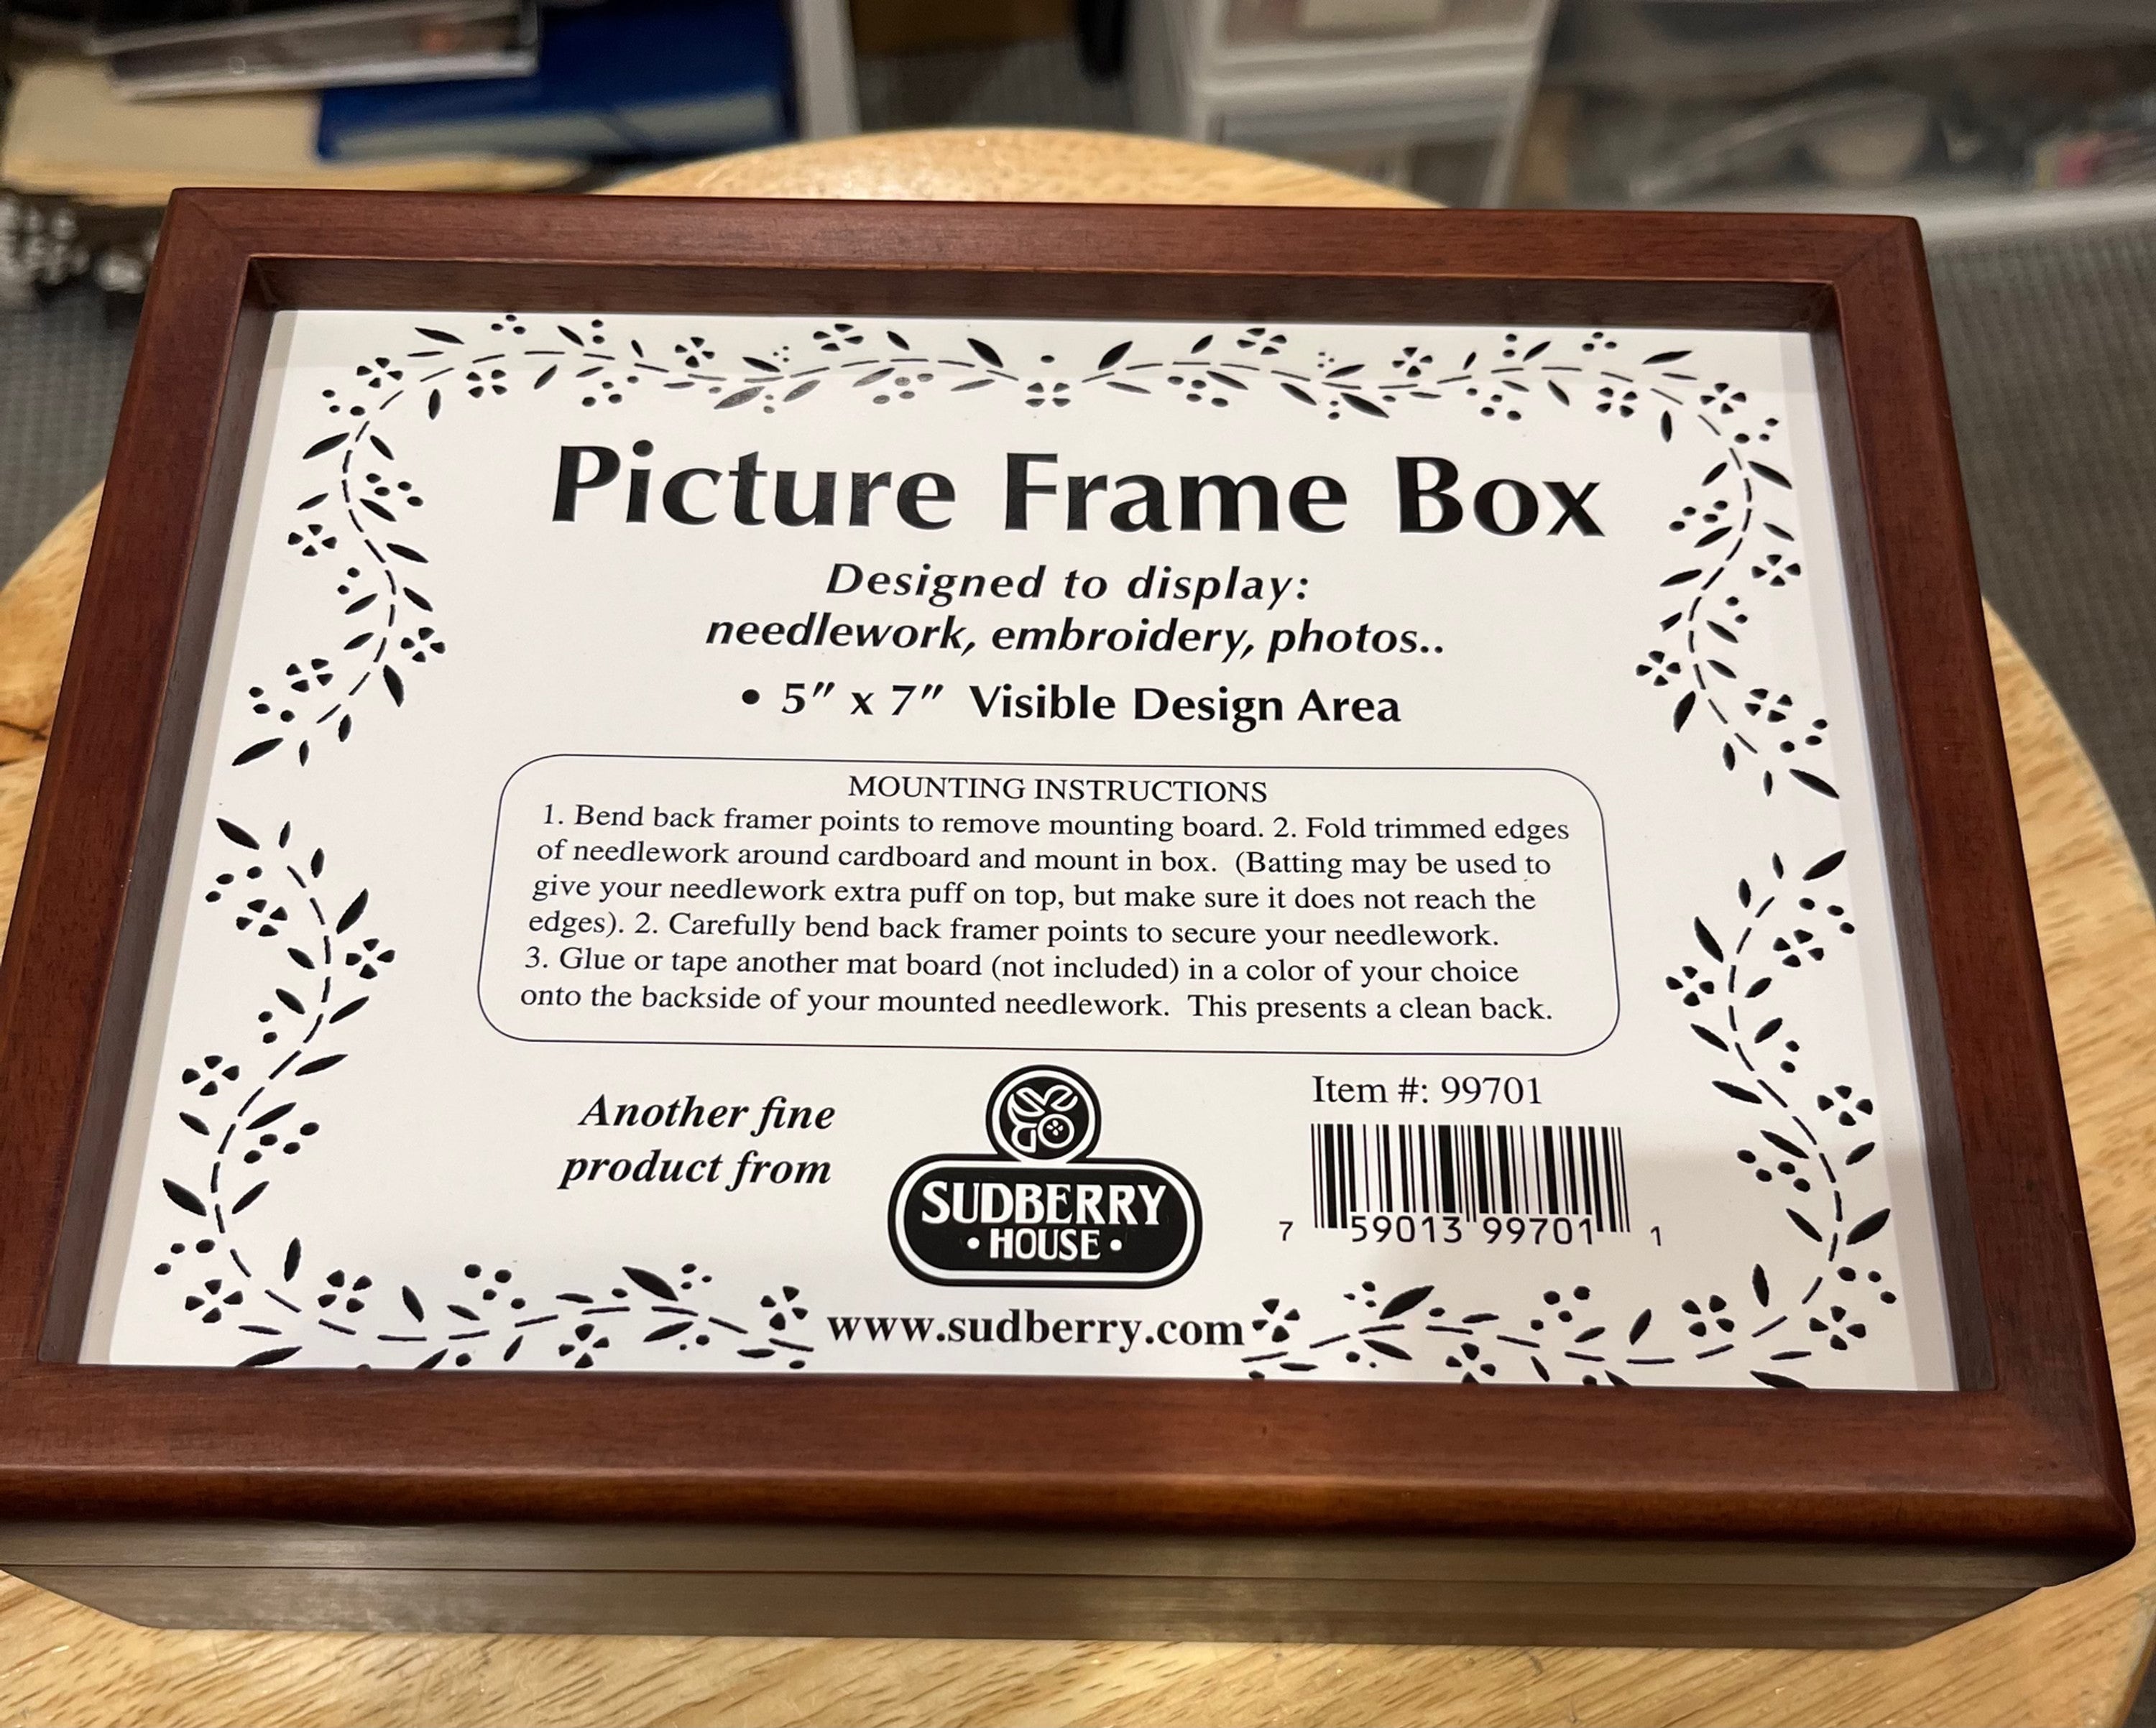 Sudberry Picture Frame Box in Mahogany